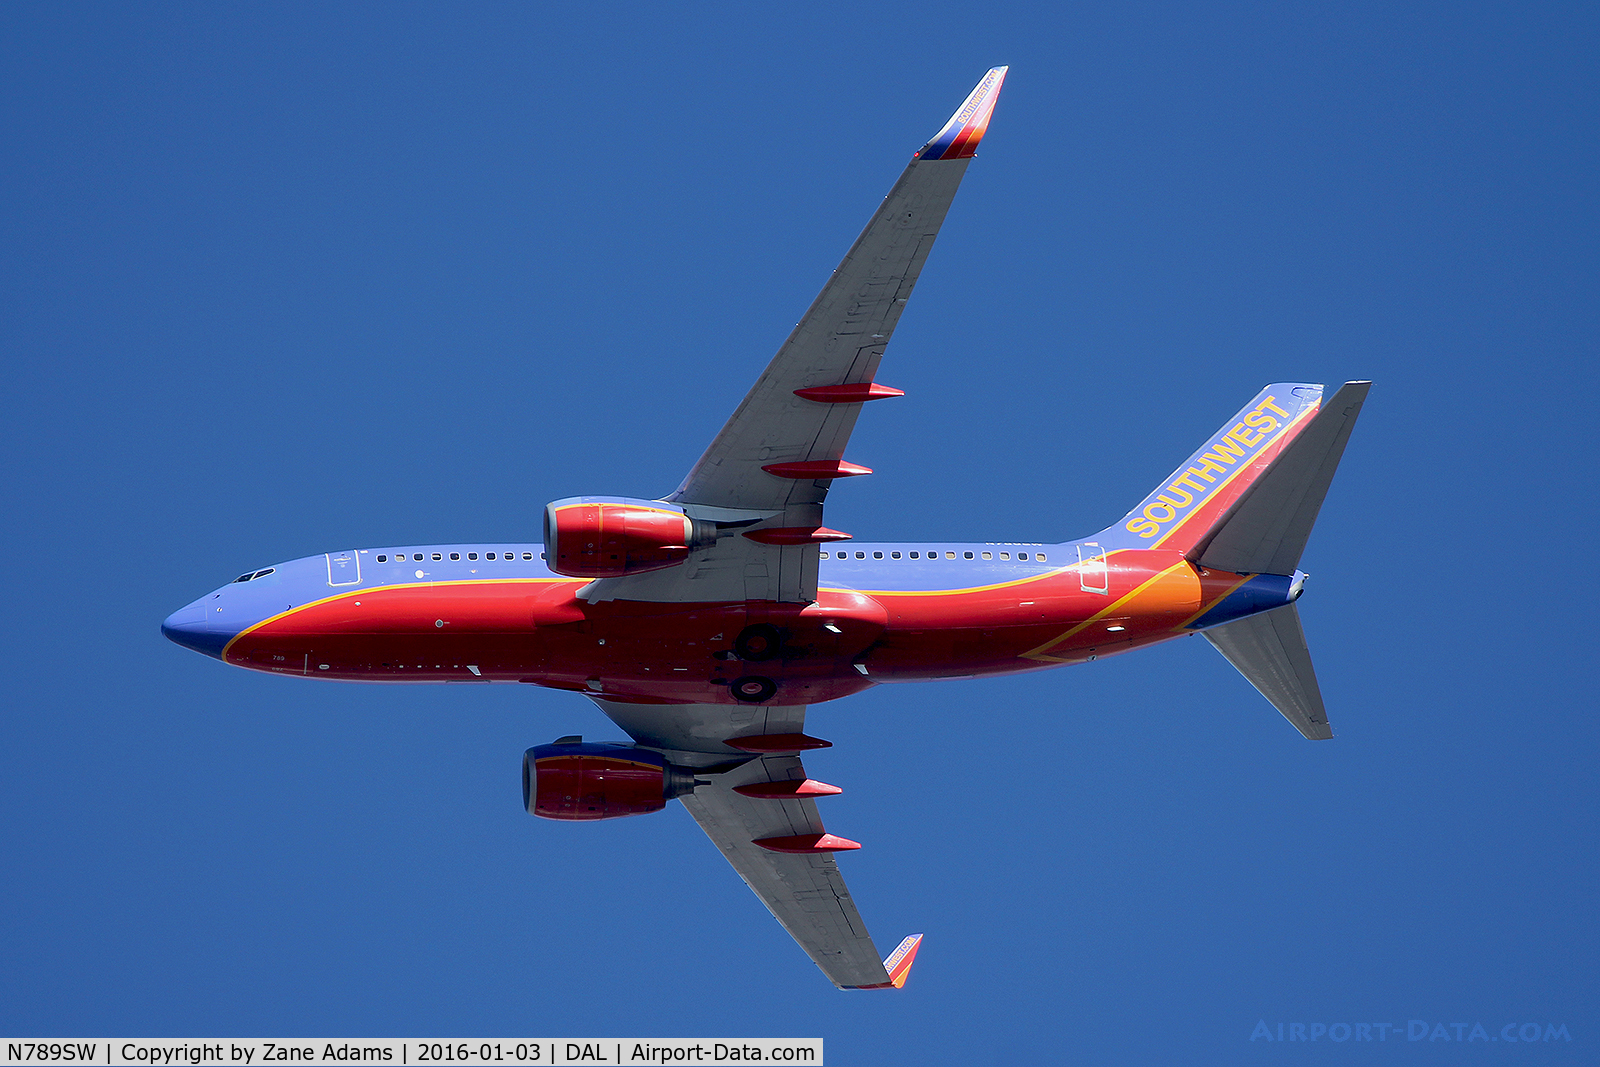 N789SW, 2000 Boeing 737-7H4 C/N 29816, Descending into Dallas Love Field